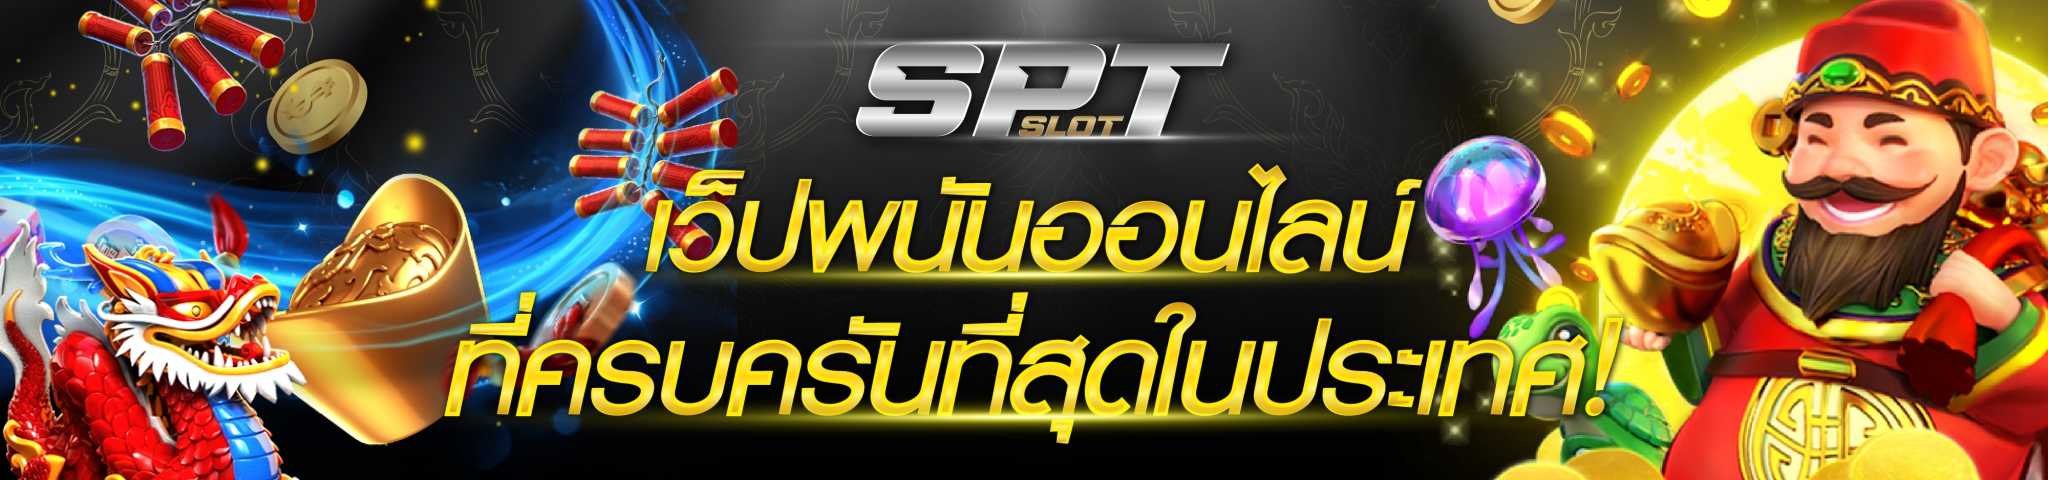 SPT SLOT เกมส์สล็อตออนไลน์ ครบครันที่สุดในประเทศ